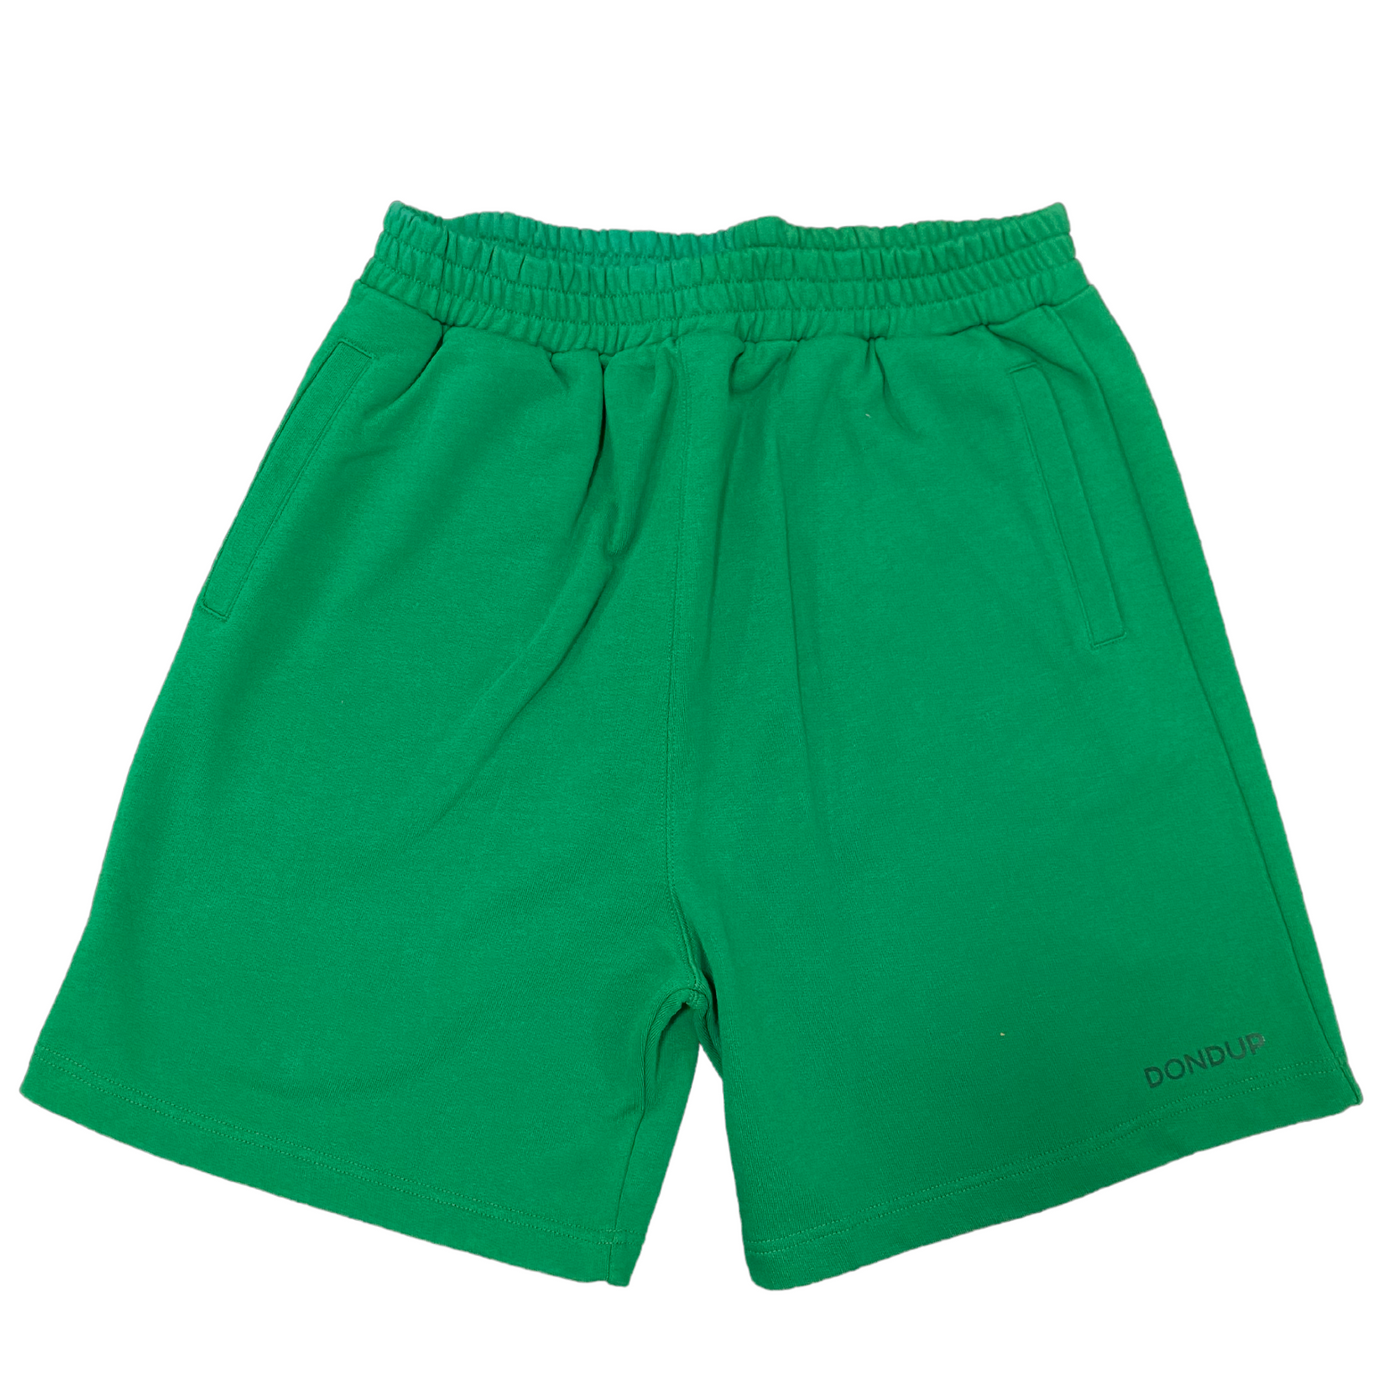 Dondup Sweat Shorts in Green